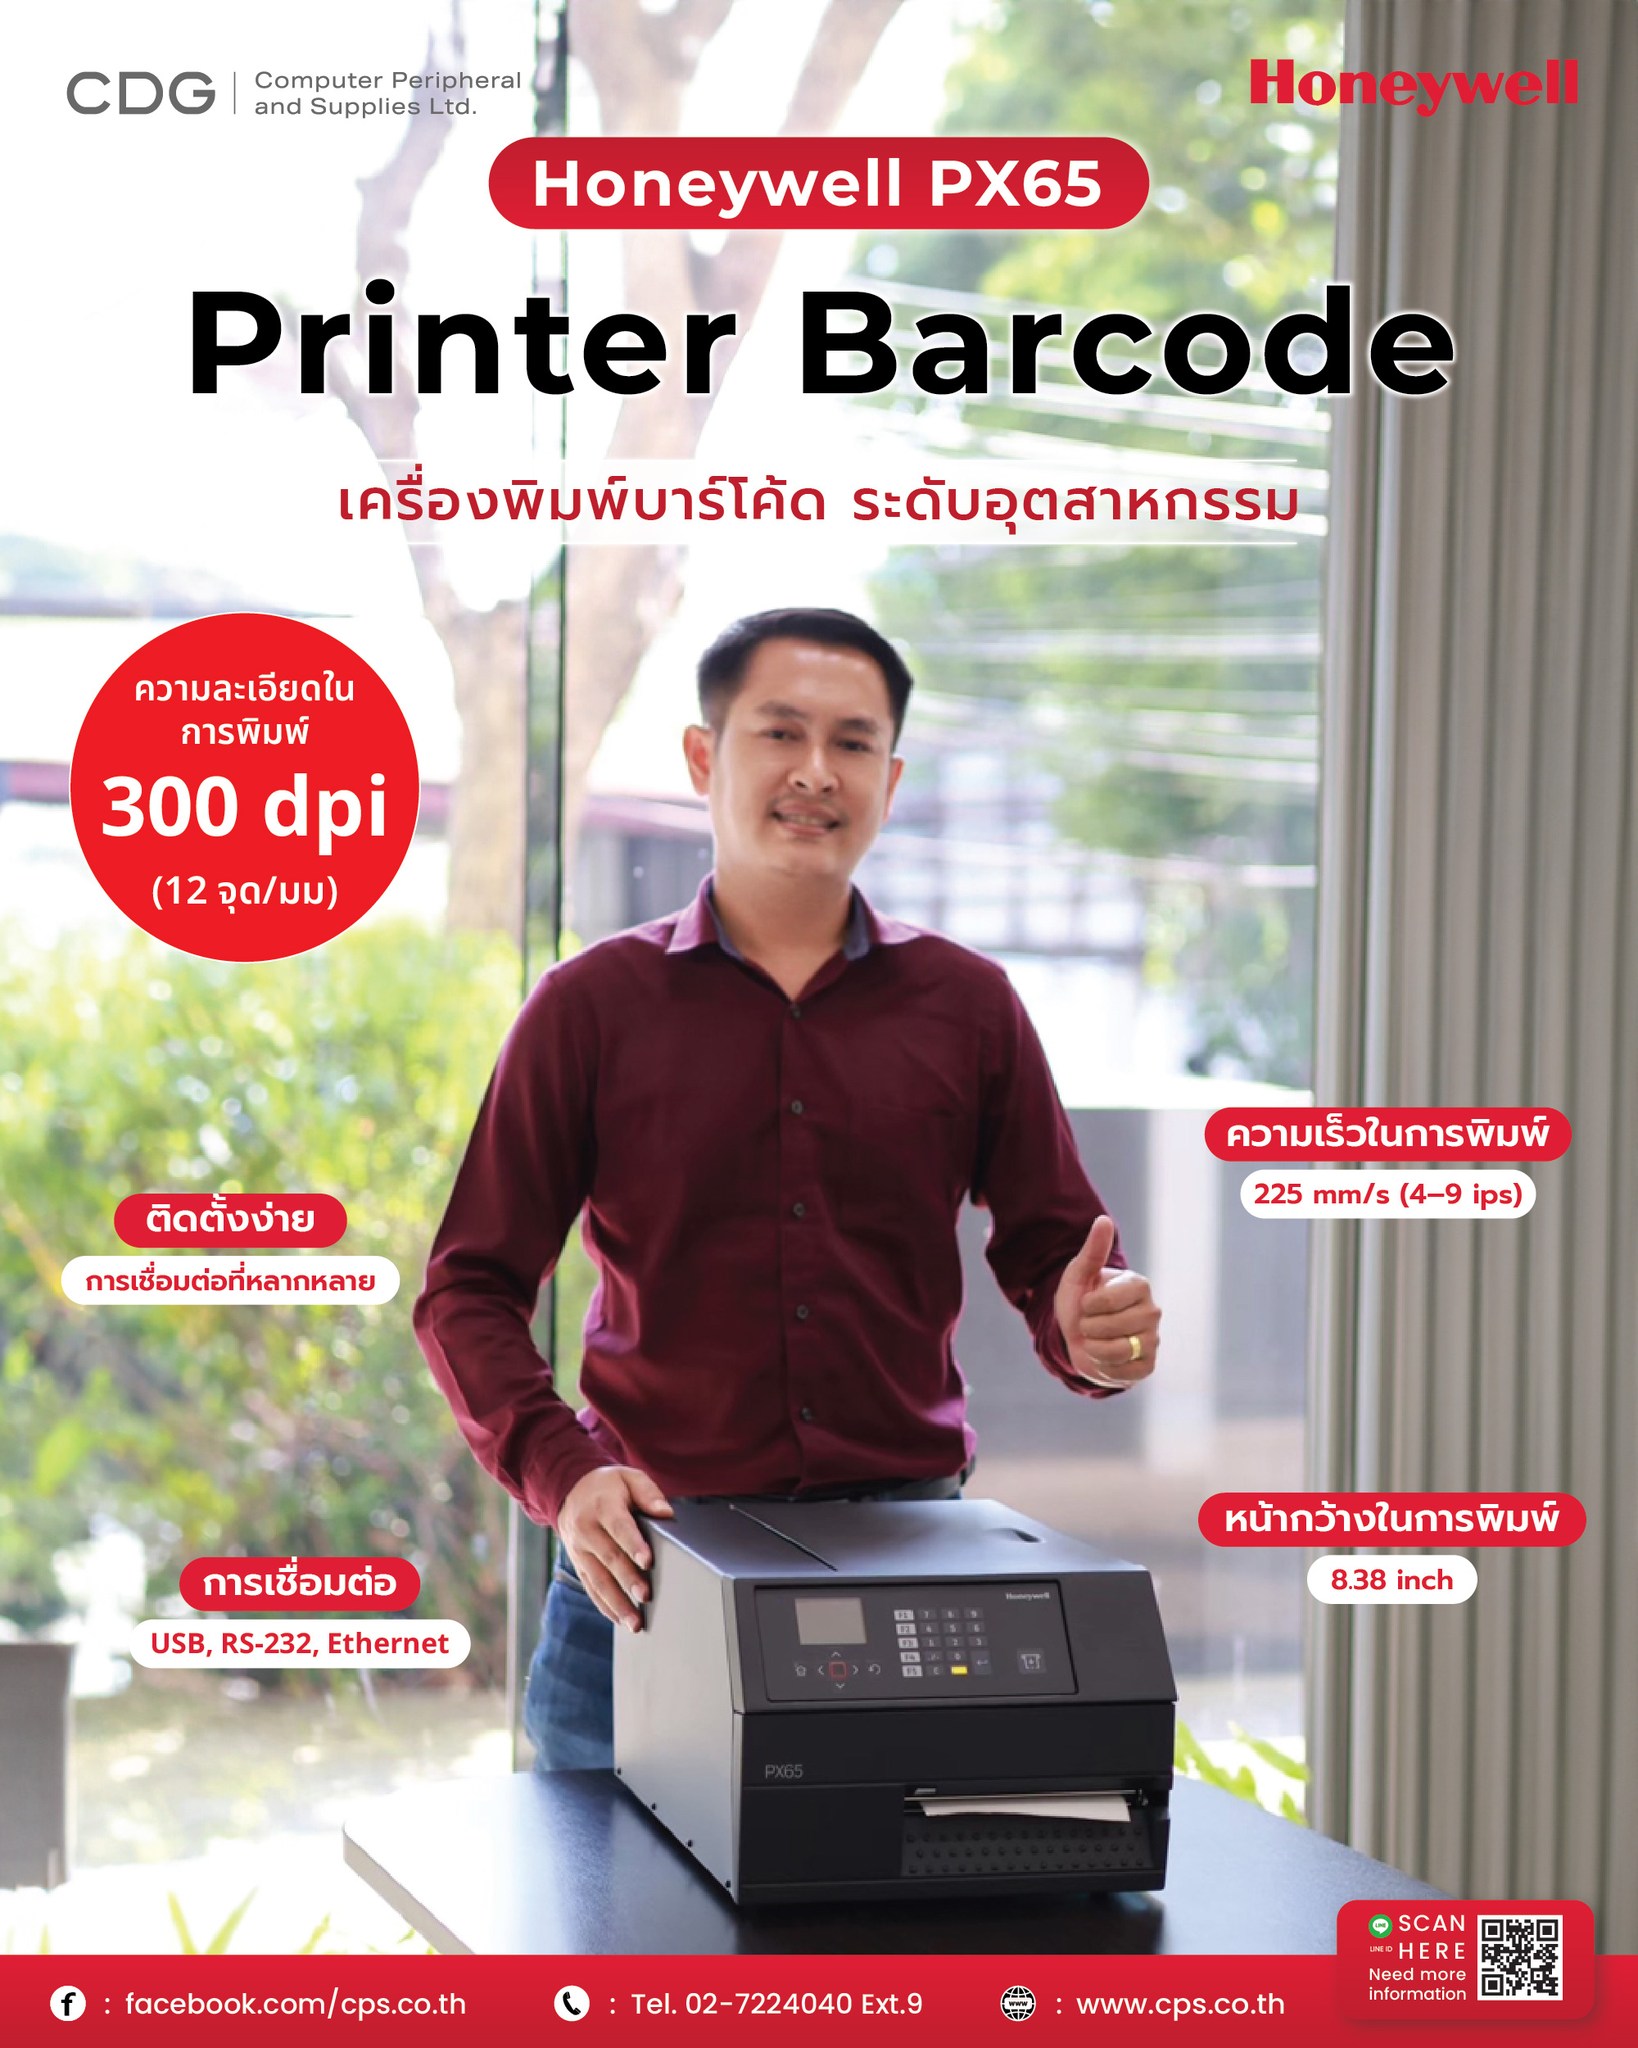 Honeywell PX65 Industrial Printers Barcode